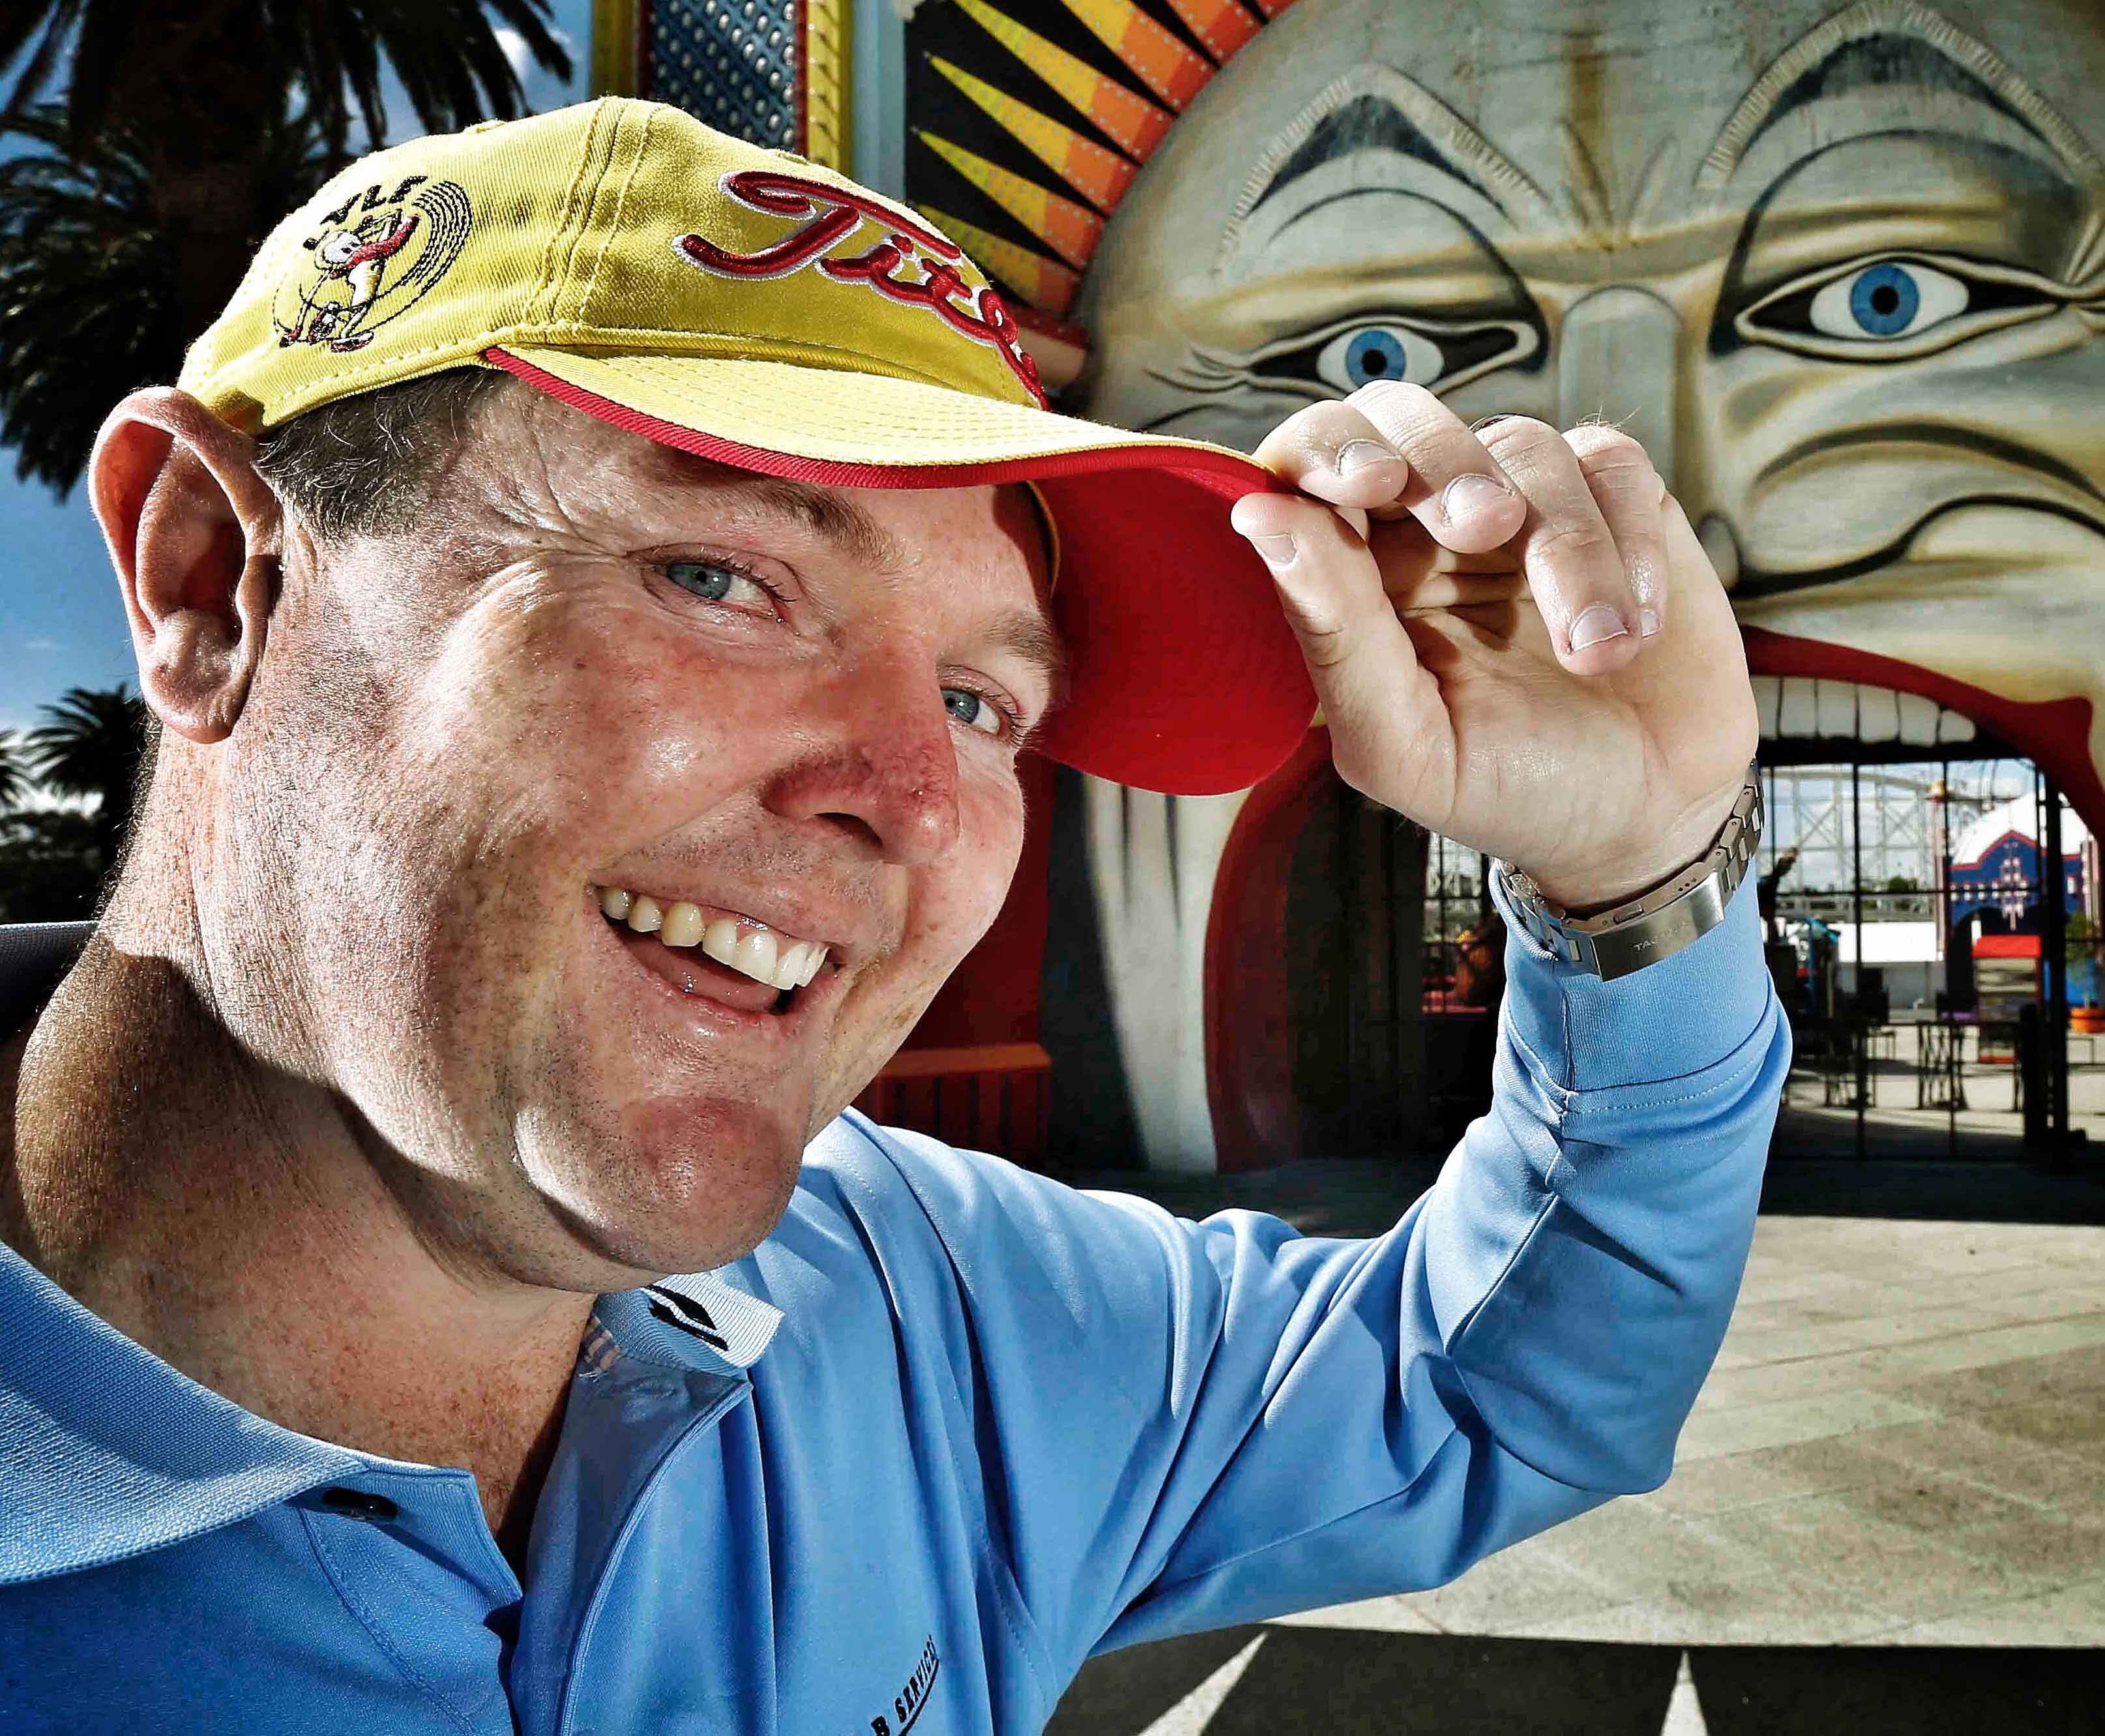 36, Jarrod Australian dies | golfer for message aged leaves Lyle: CNN supporters